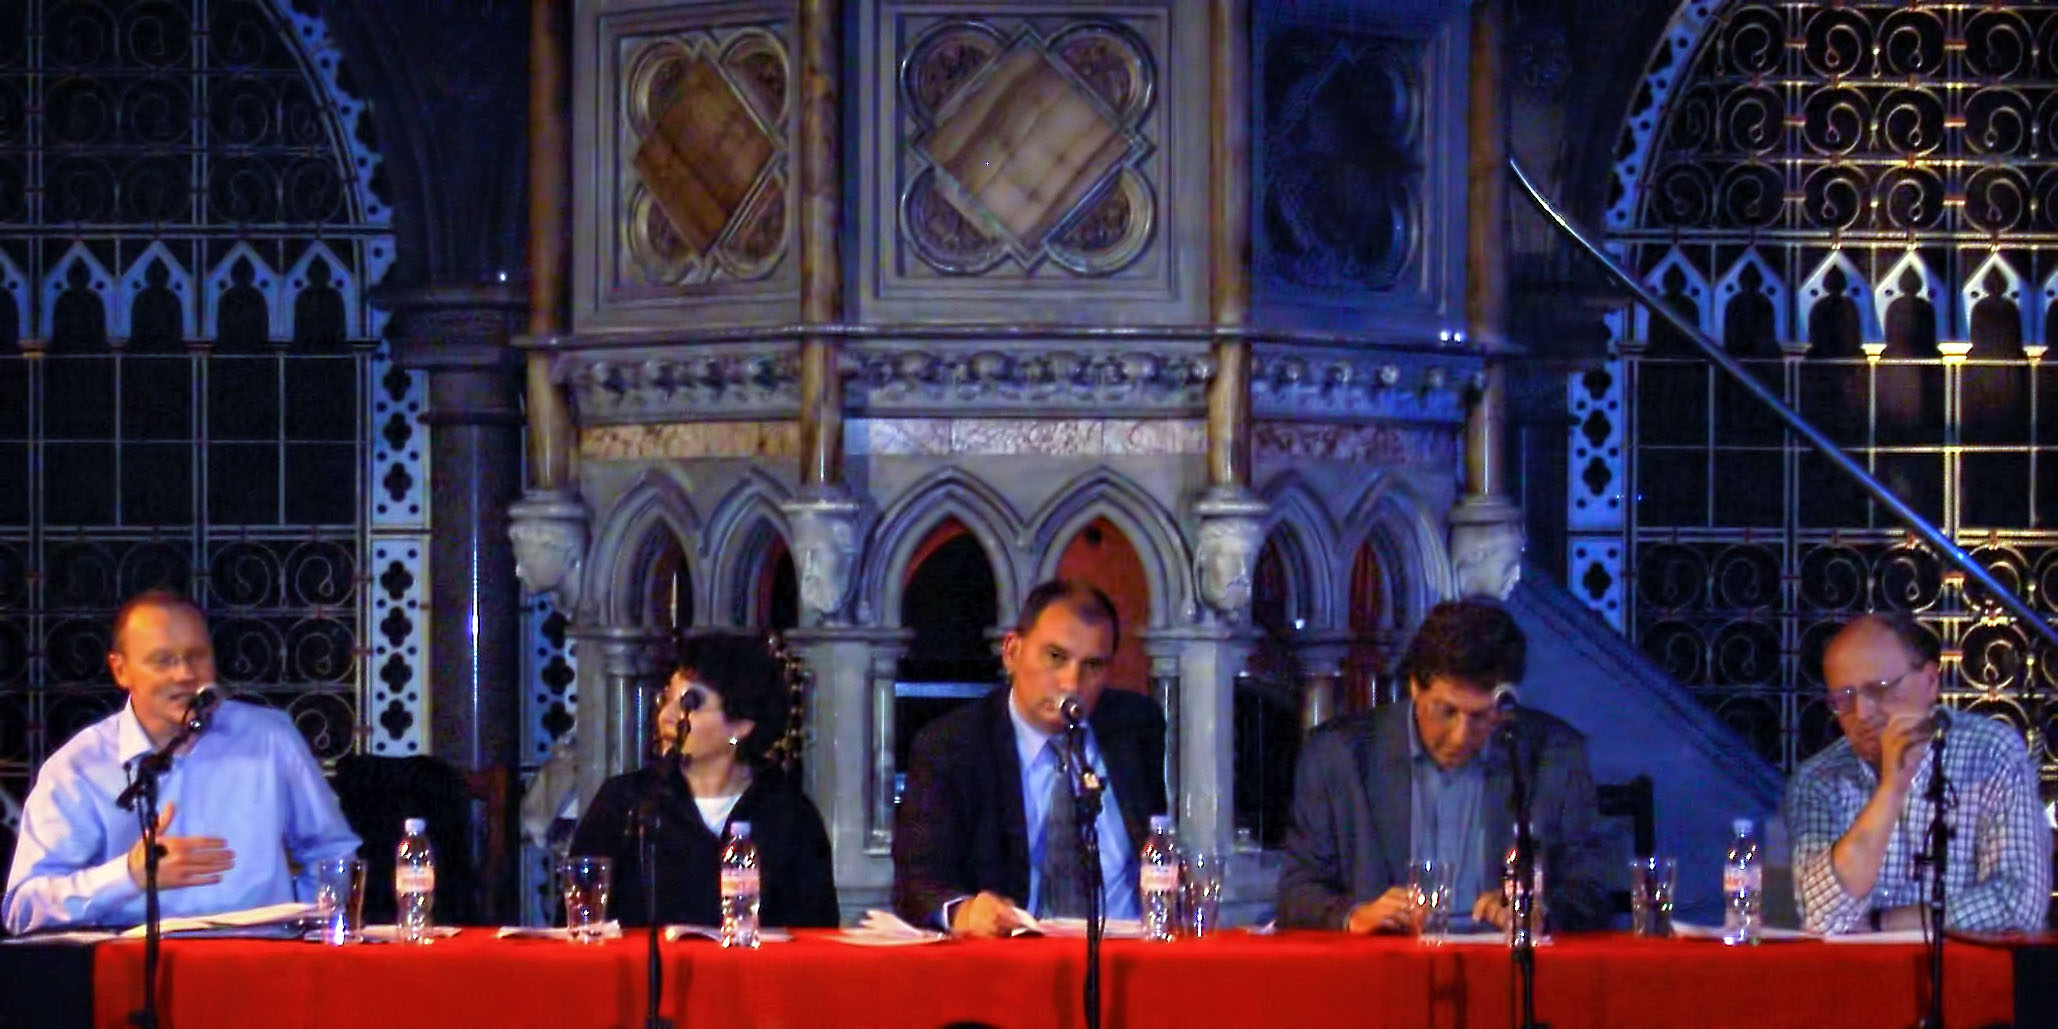 Alan Johnson, Eve Garrard, Nick Cohen, Shalom Lappin and Norman Geras signing the Euston Manifesto. Photo: fys / Wikimedia